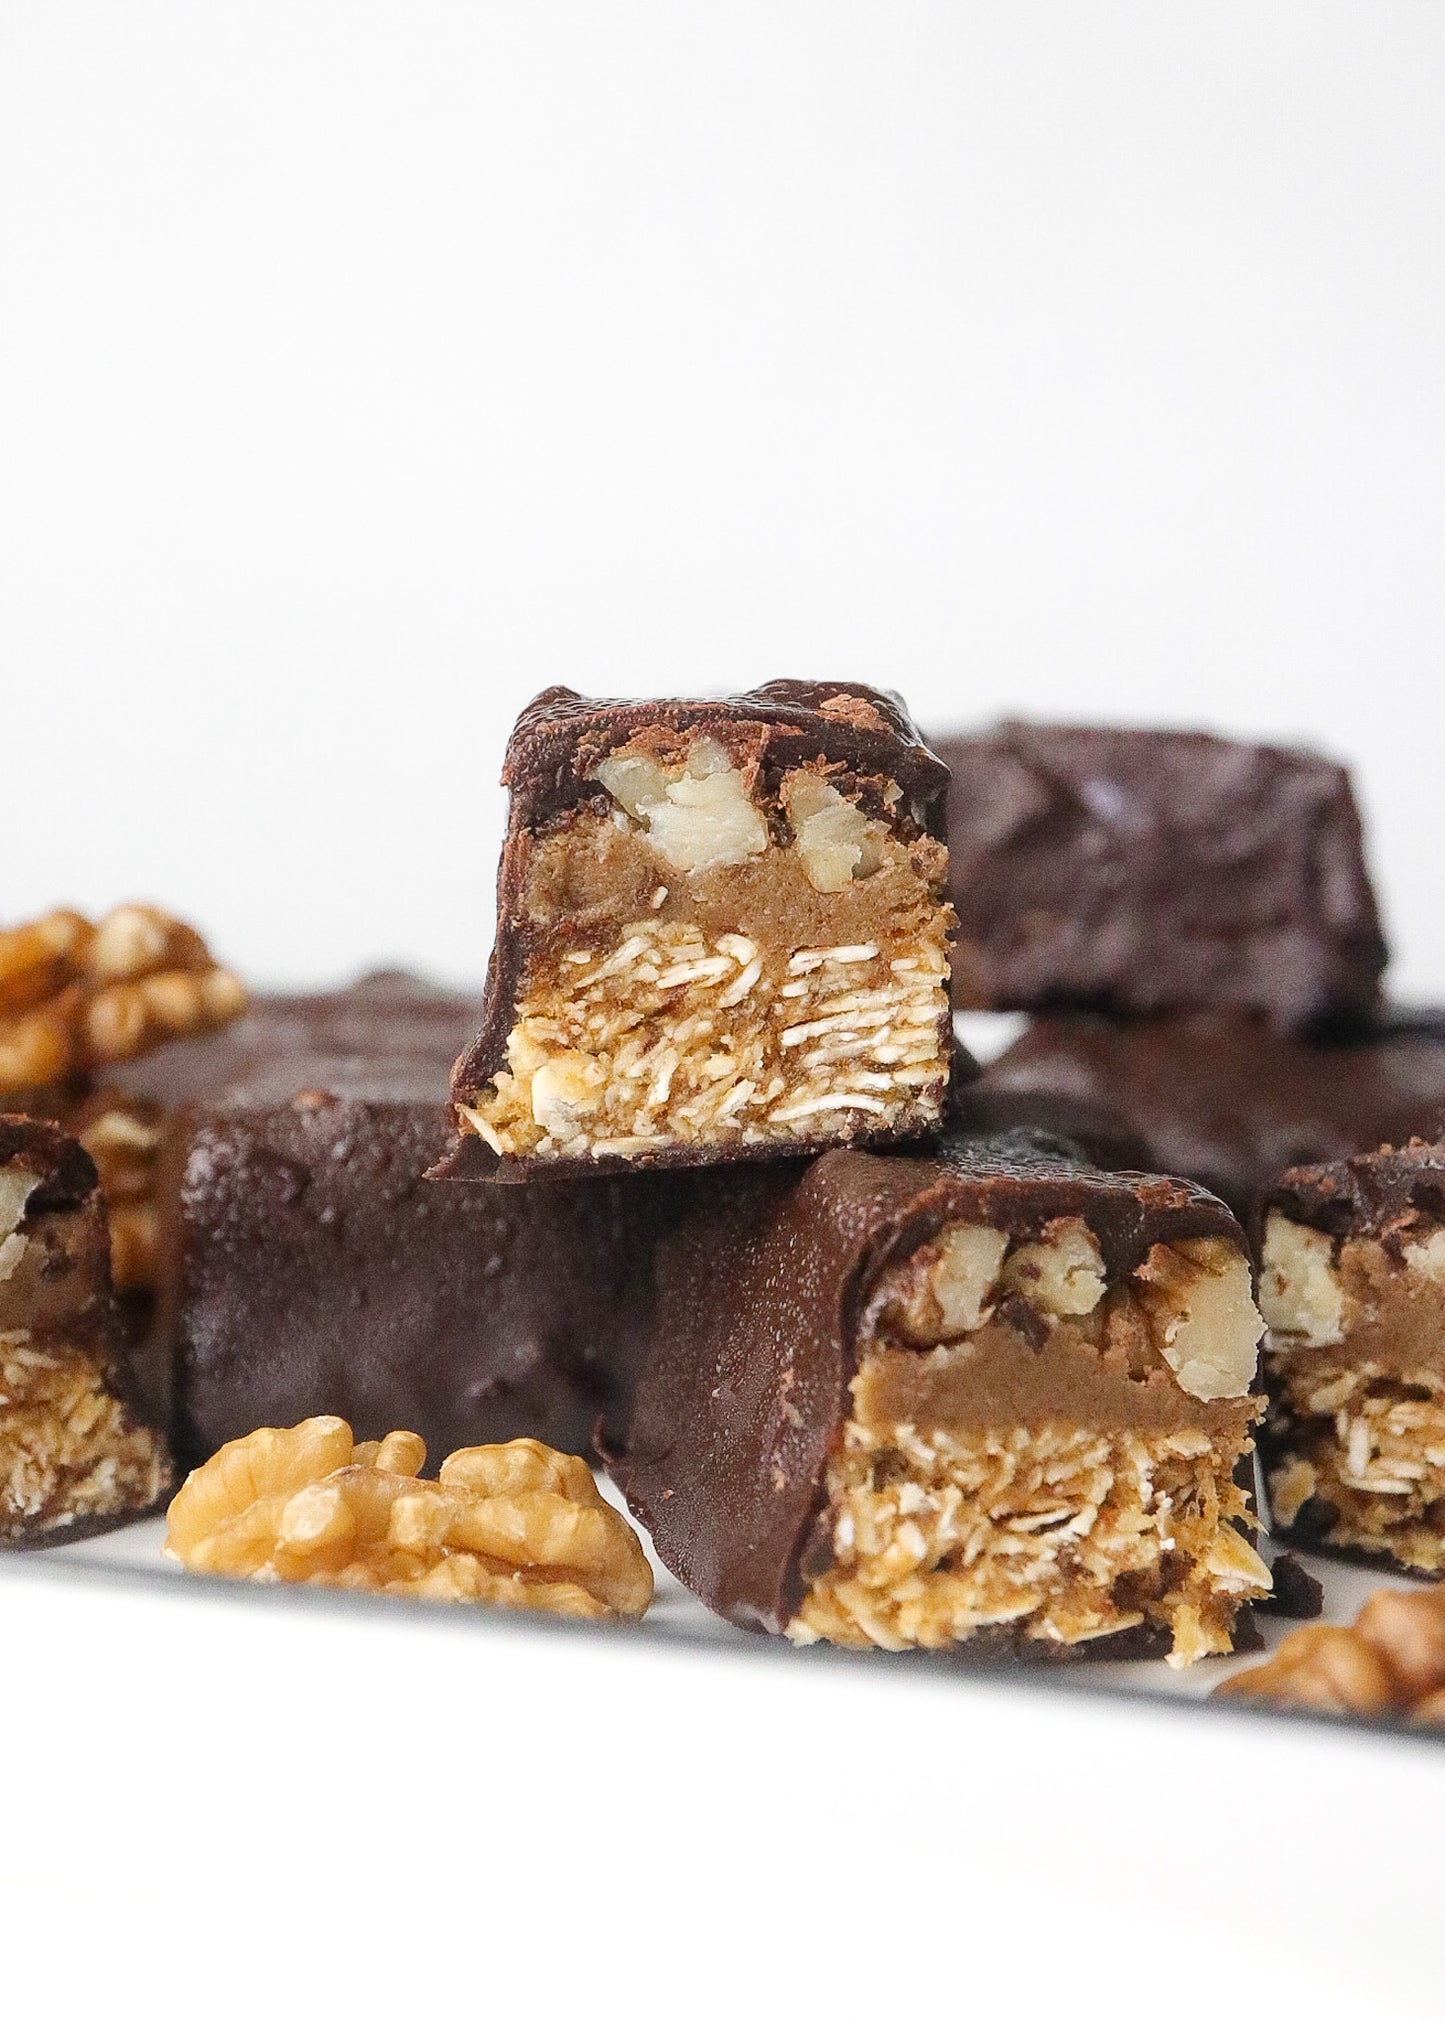 Best Seller: Walnut Chocolate Protein Bars - 250 grams